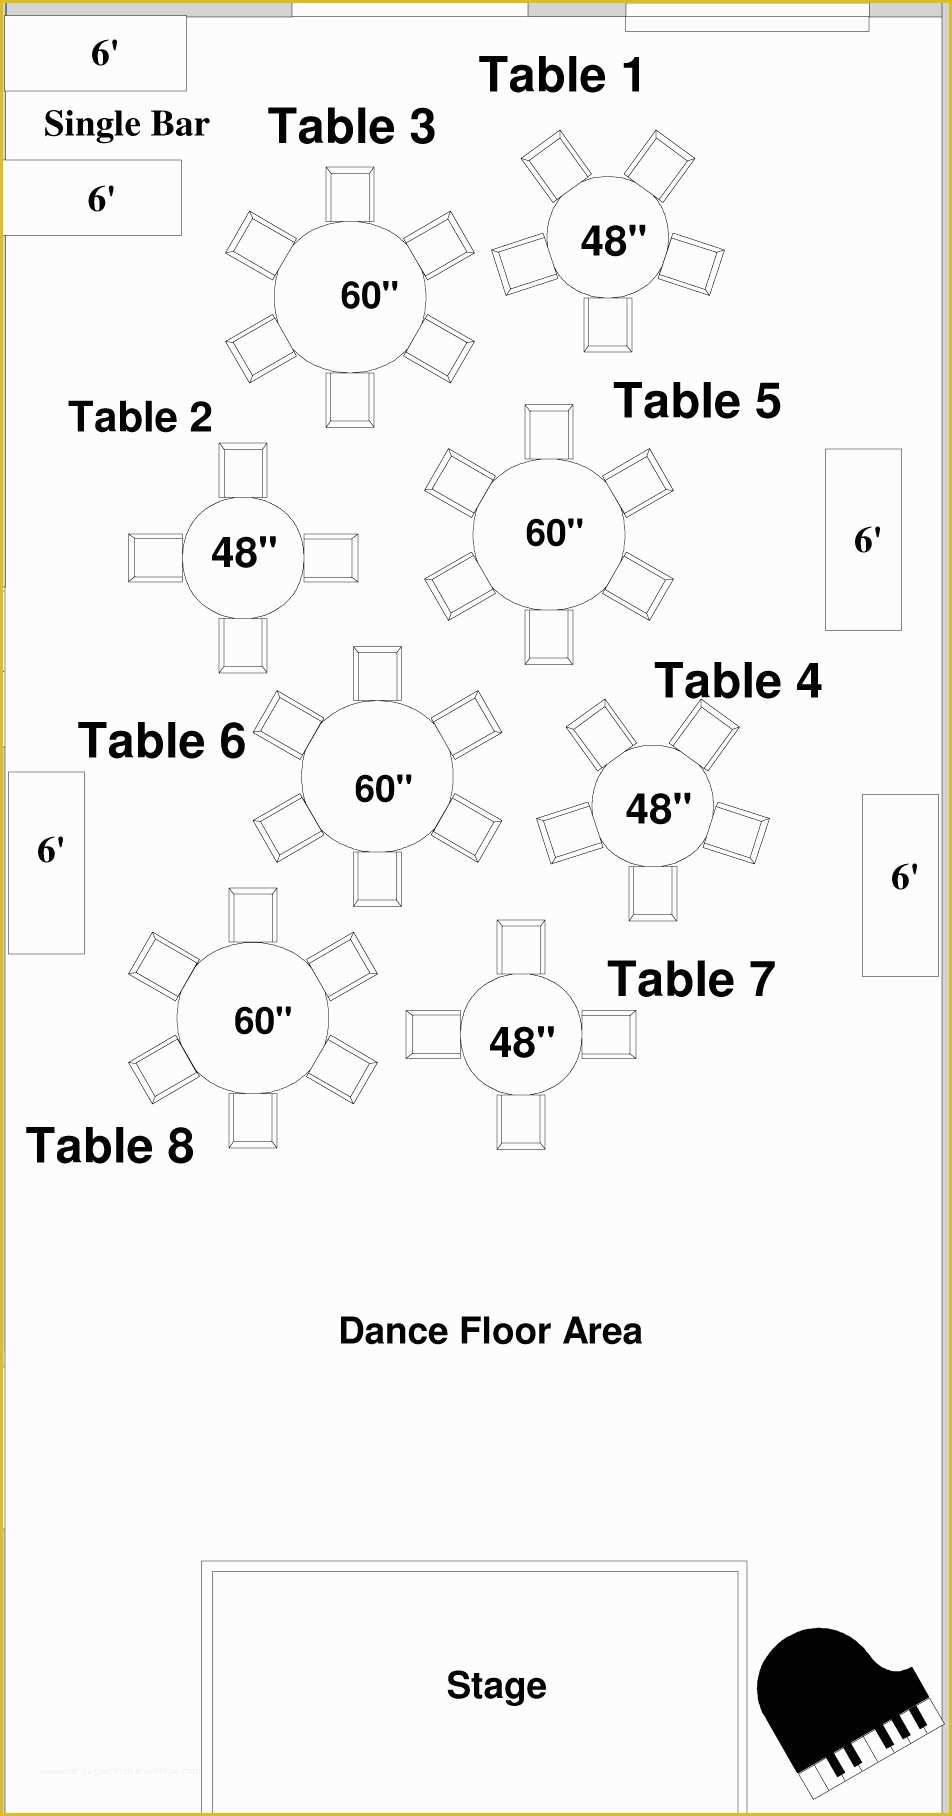 Free Wedding Floor Plan Template Of Choosing A Floor Plan for Your Wedding Reception